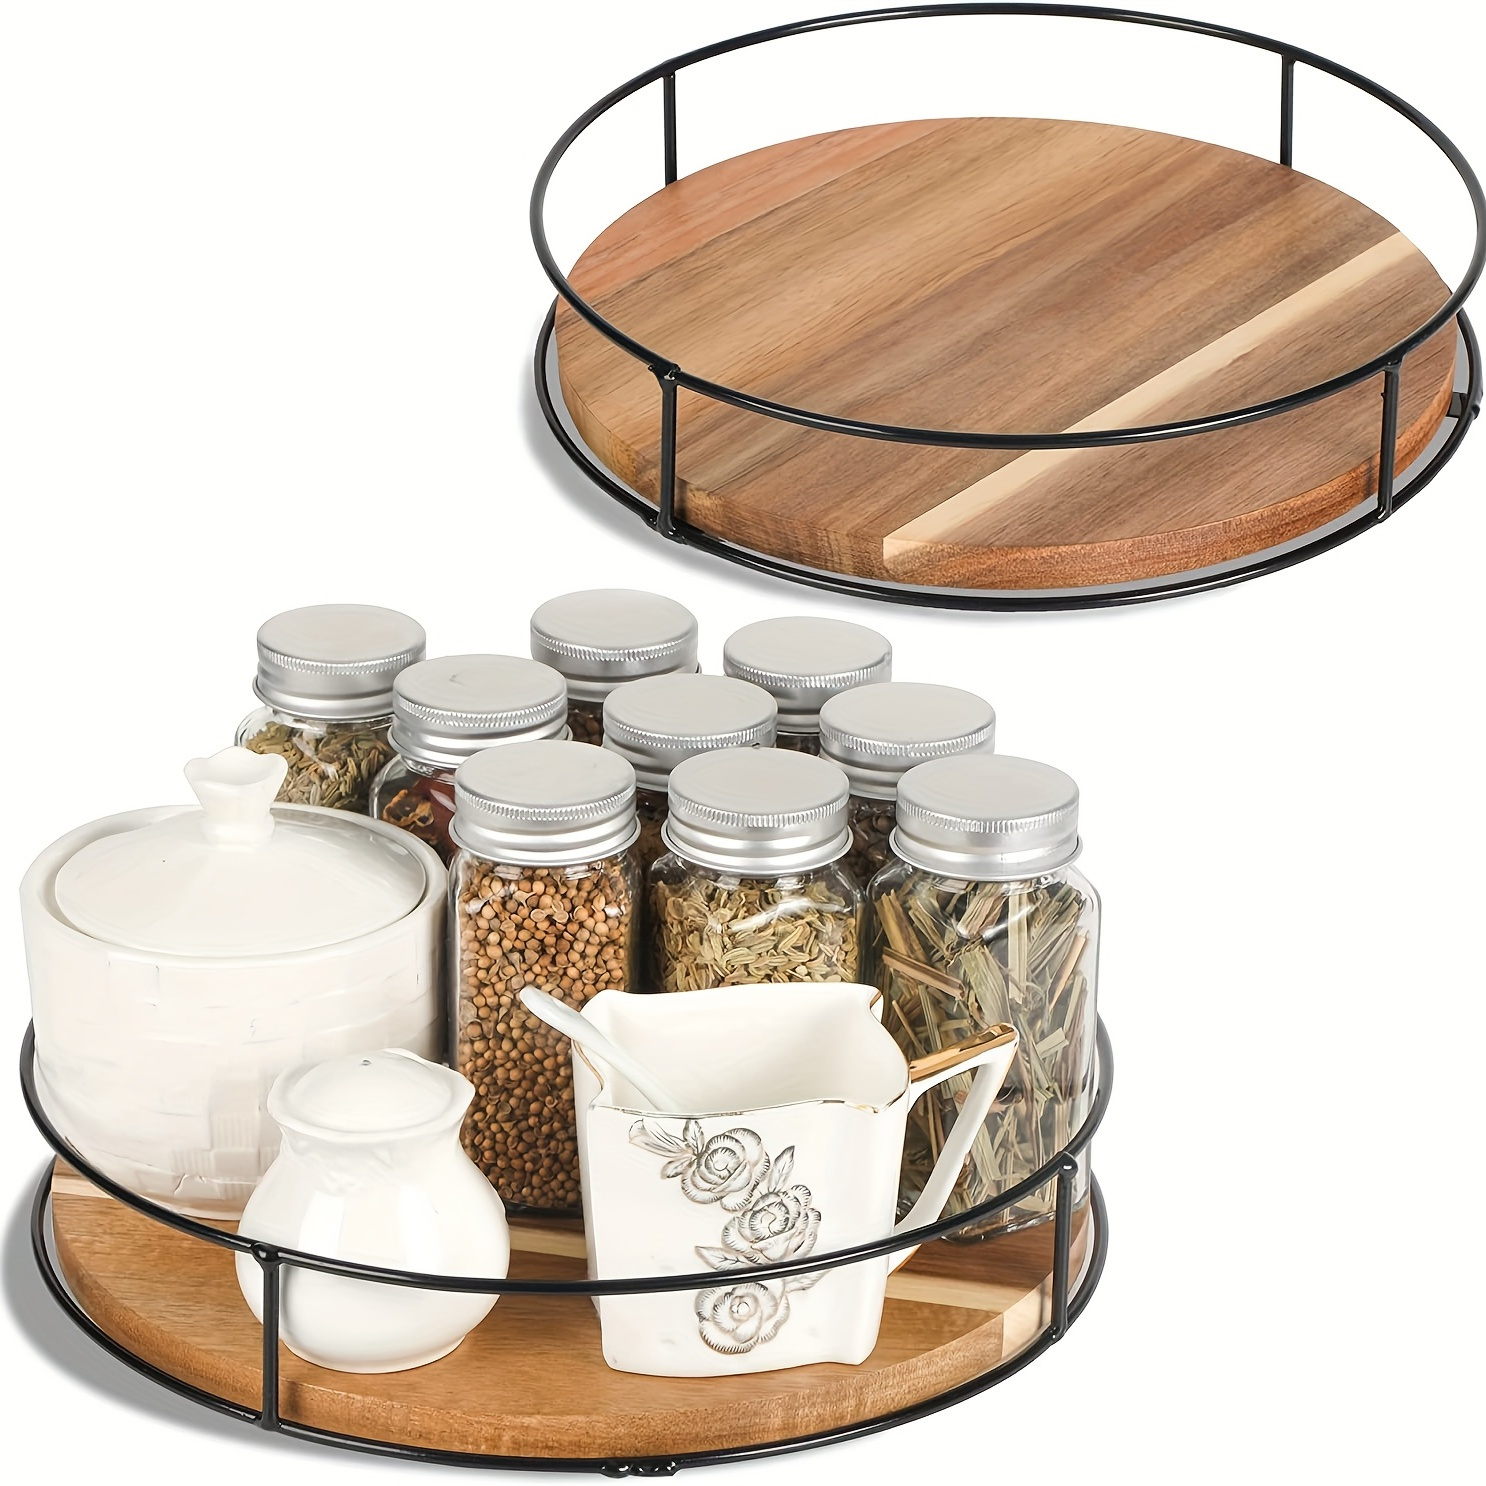 

1pc Wooden Turntable Organizer - Multipurpose Rotating Spice Rack Holder - Versatile Storage Tray For Seasoning, Cosmetics, Desktop & Kitchen Utensils - Essential For Dorm, Apartment, Back To School